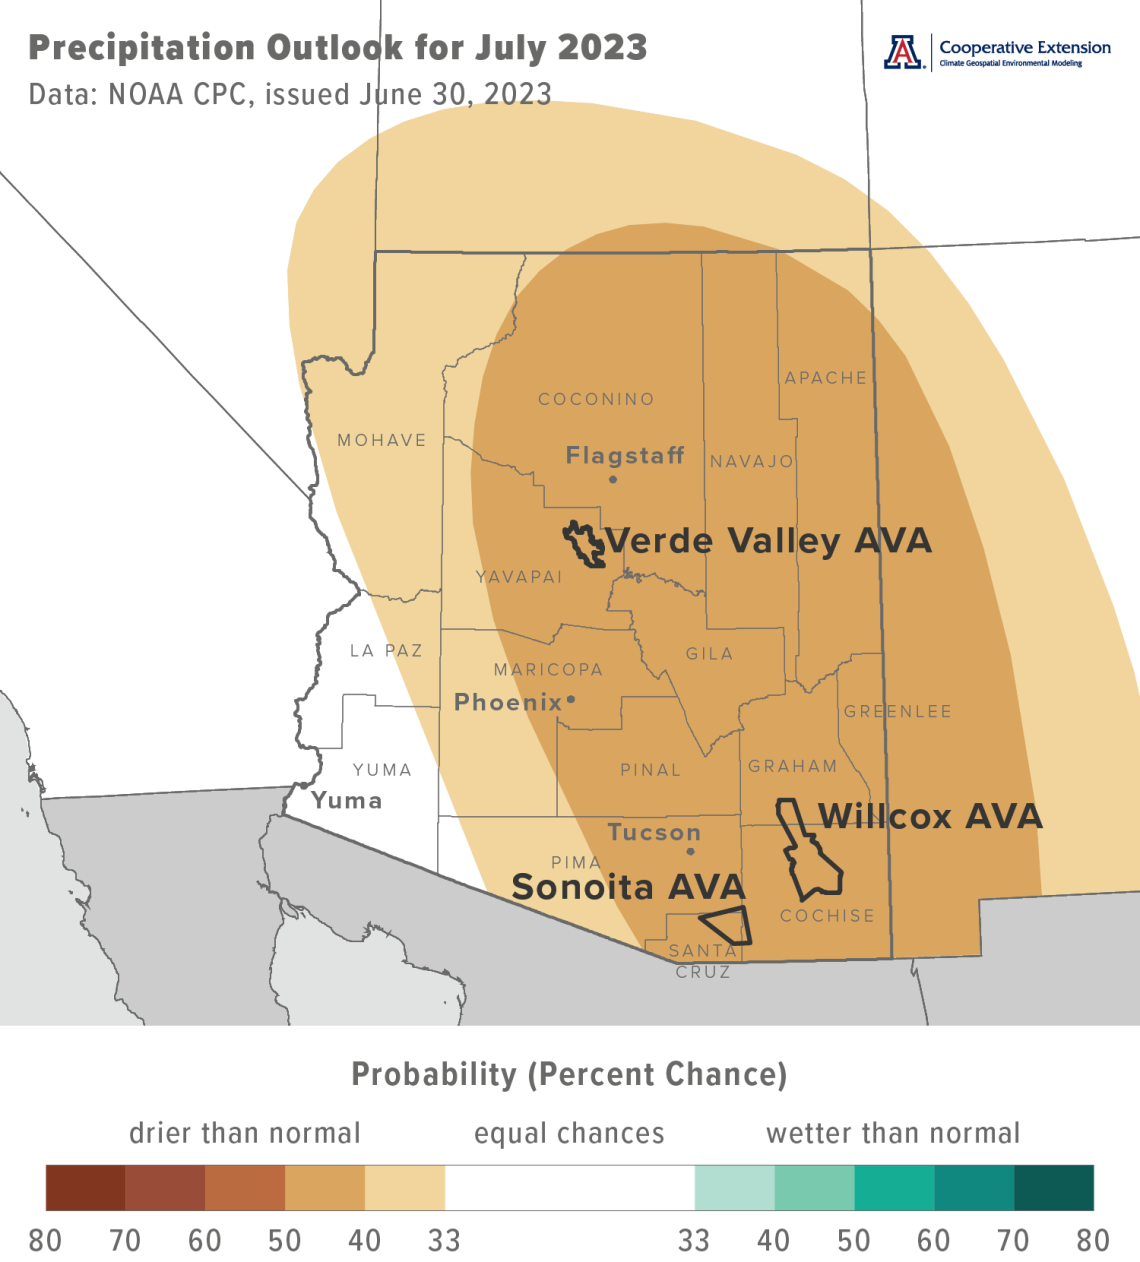 July 2023 precipitation outlook map for Arizona